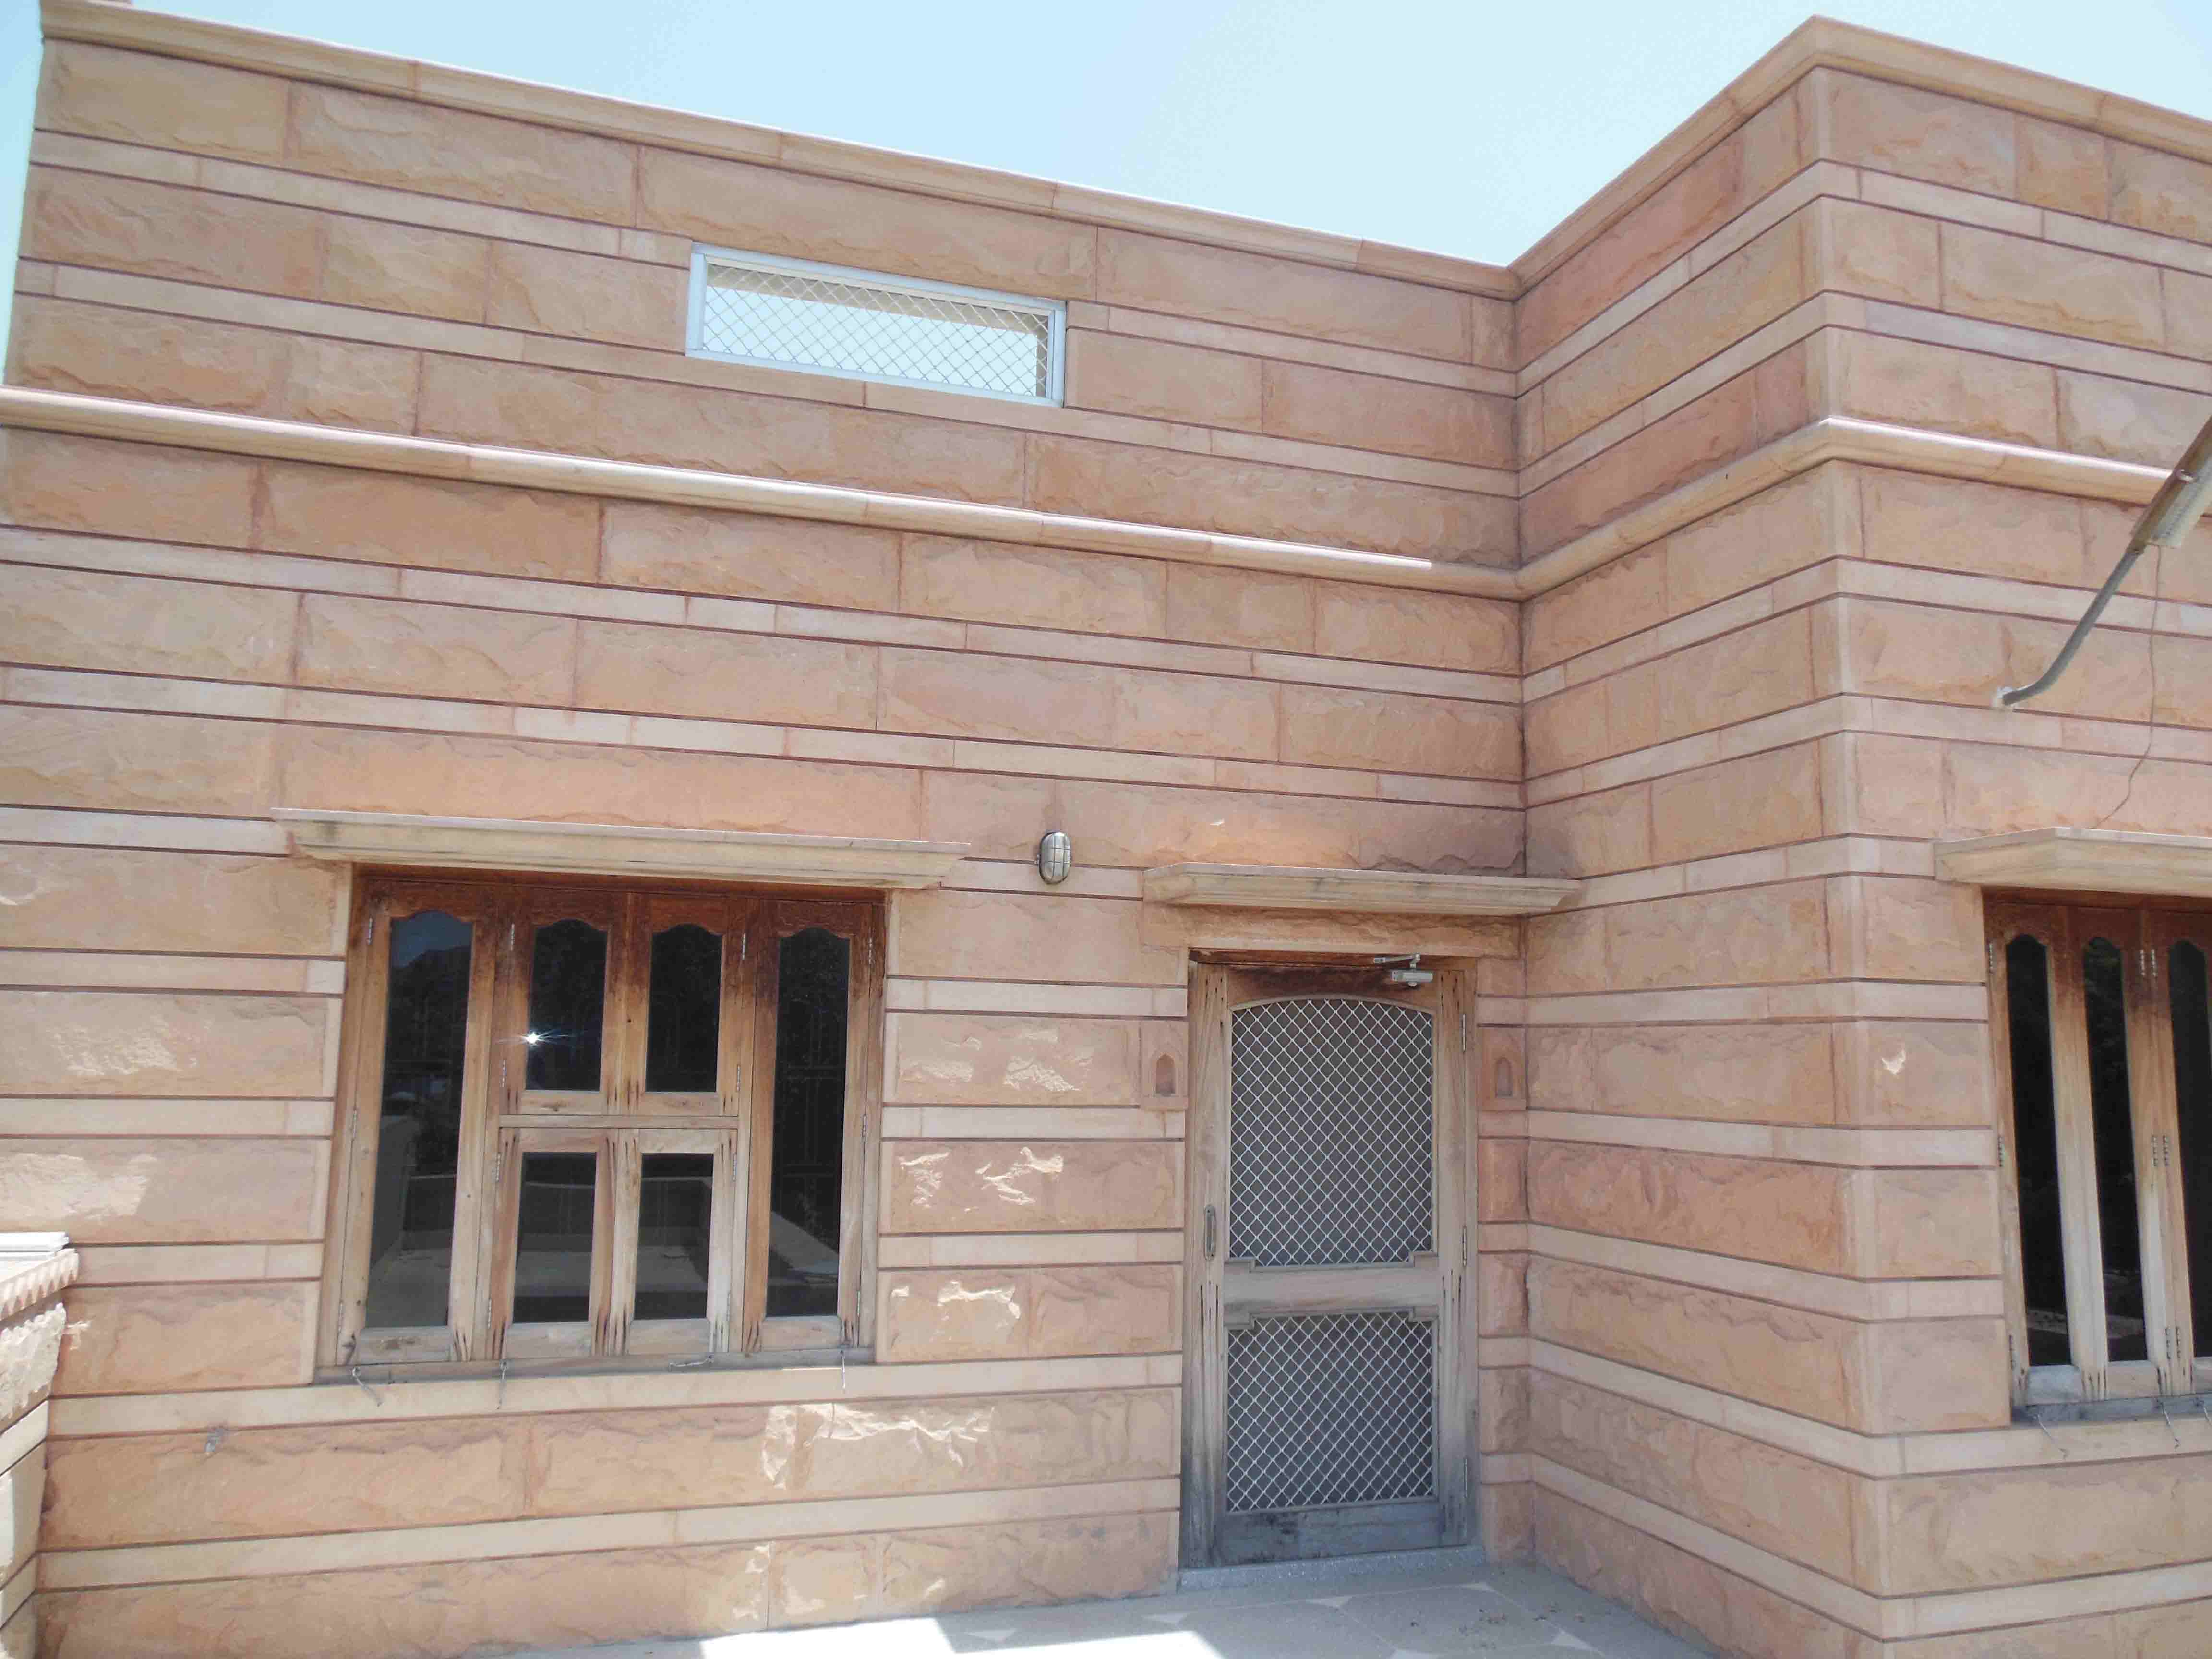 Top 1 Jodhpur Sandstone Guide Chemical Physical Properties for Home Design Jodhpur